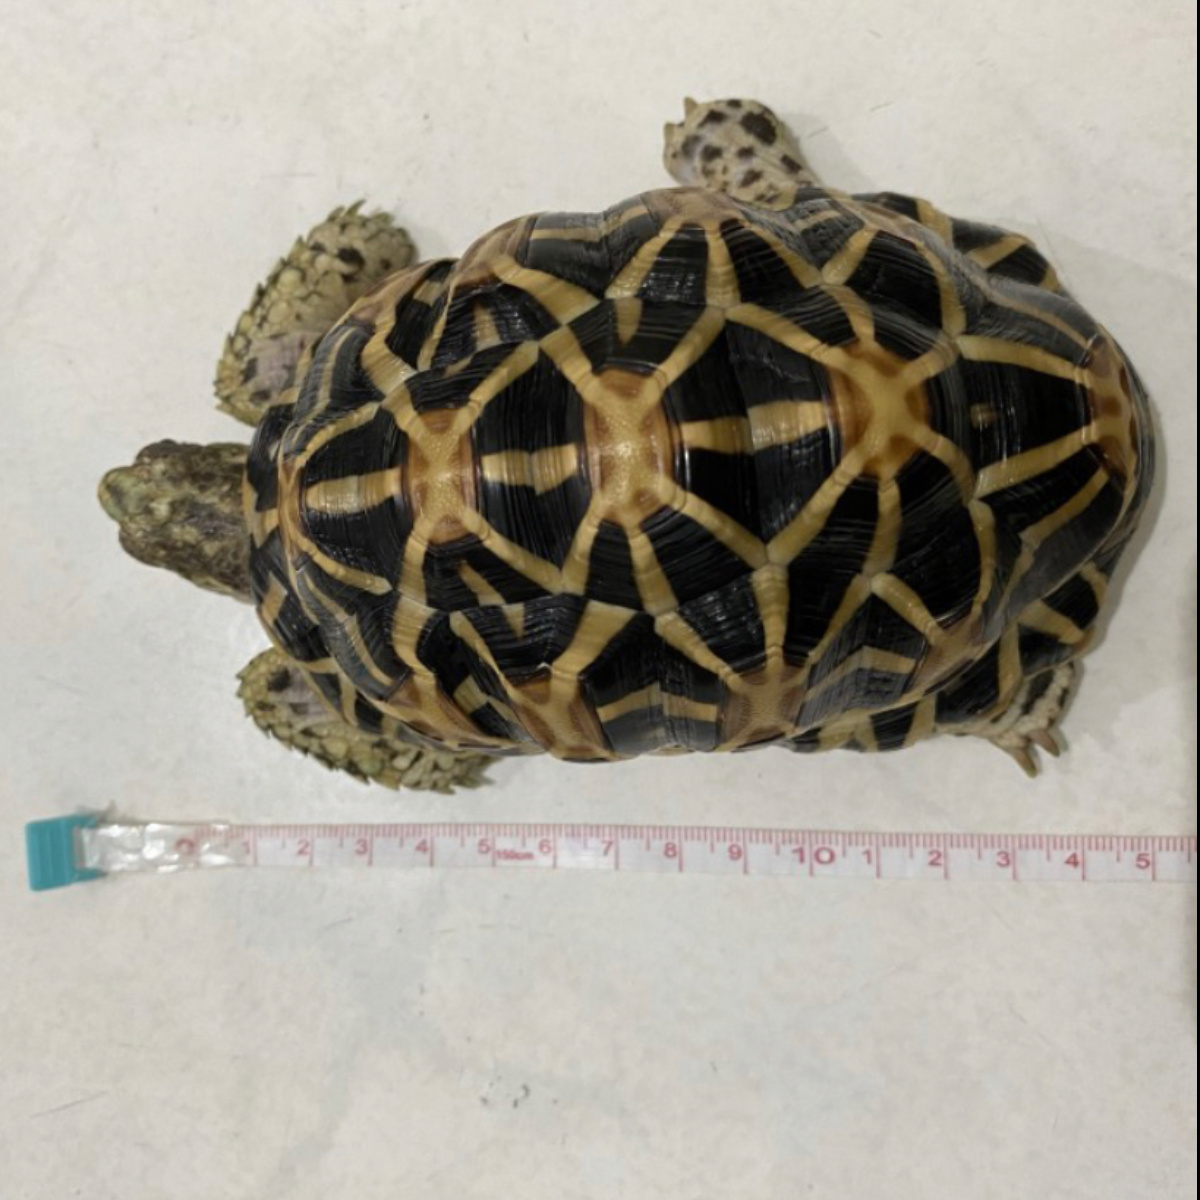 Indian Star / Istar Tortoise Reptile